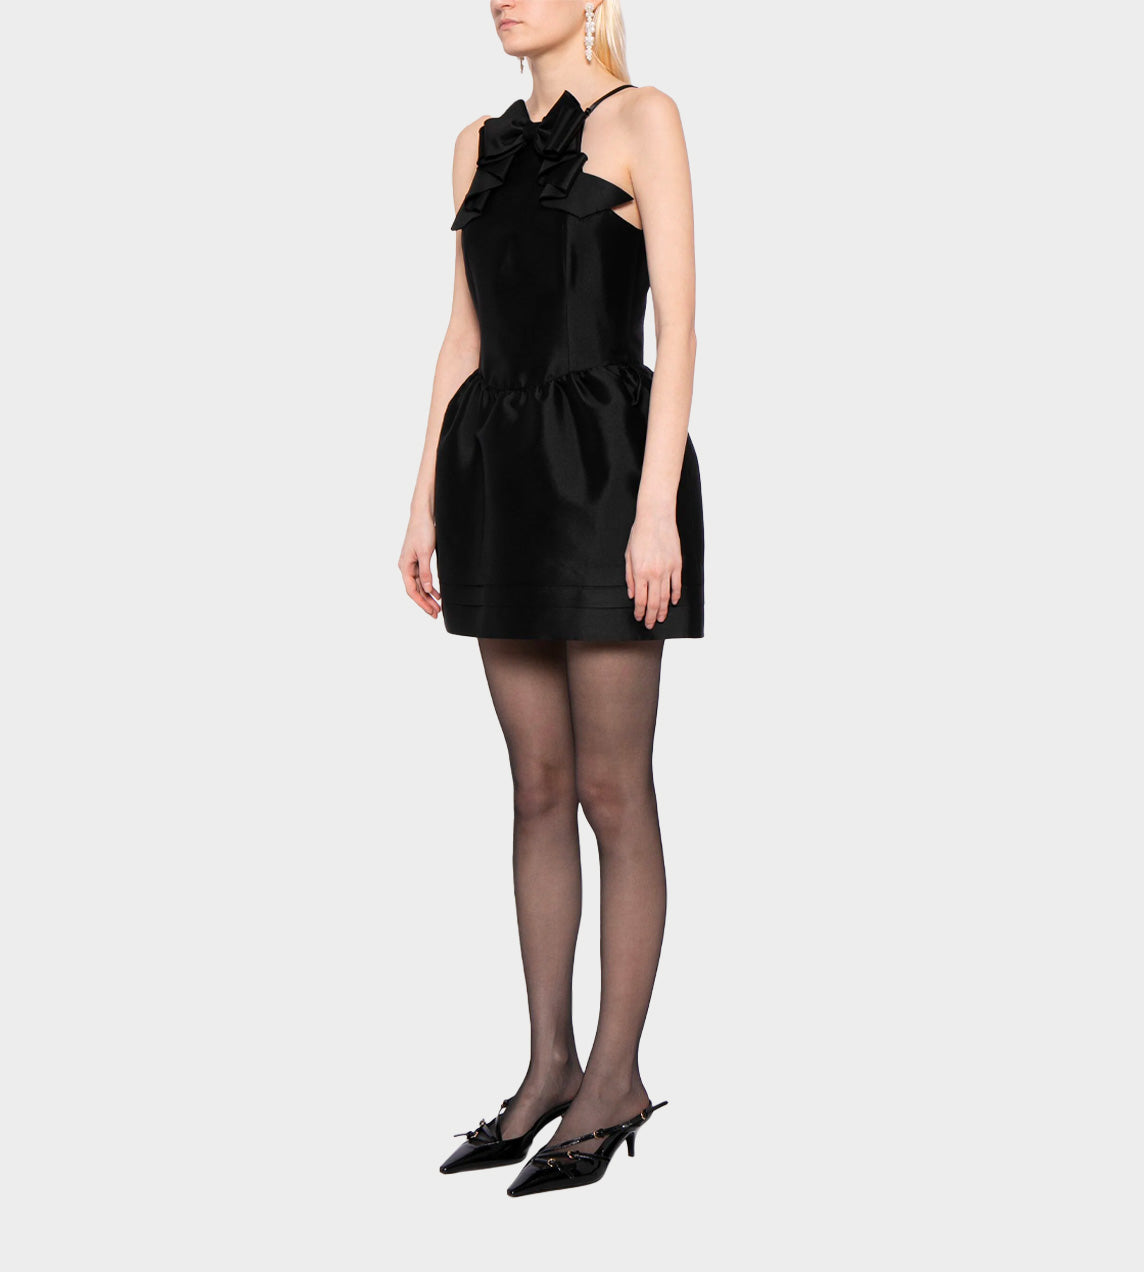 ShuShu/Tong - 3D Hanging Bow Neck Dress Black